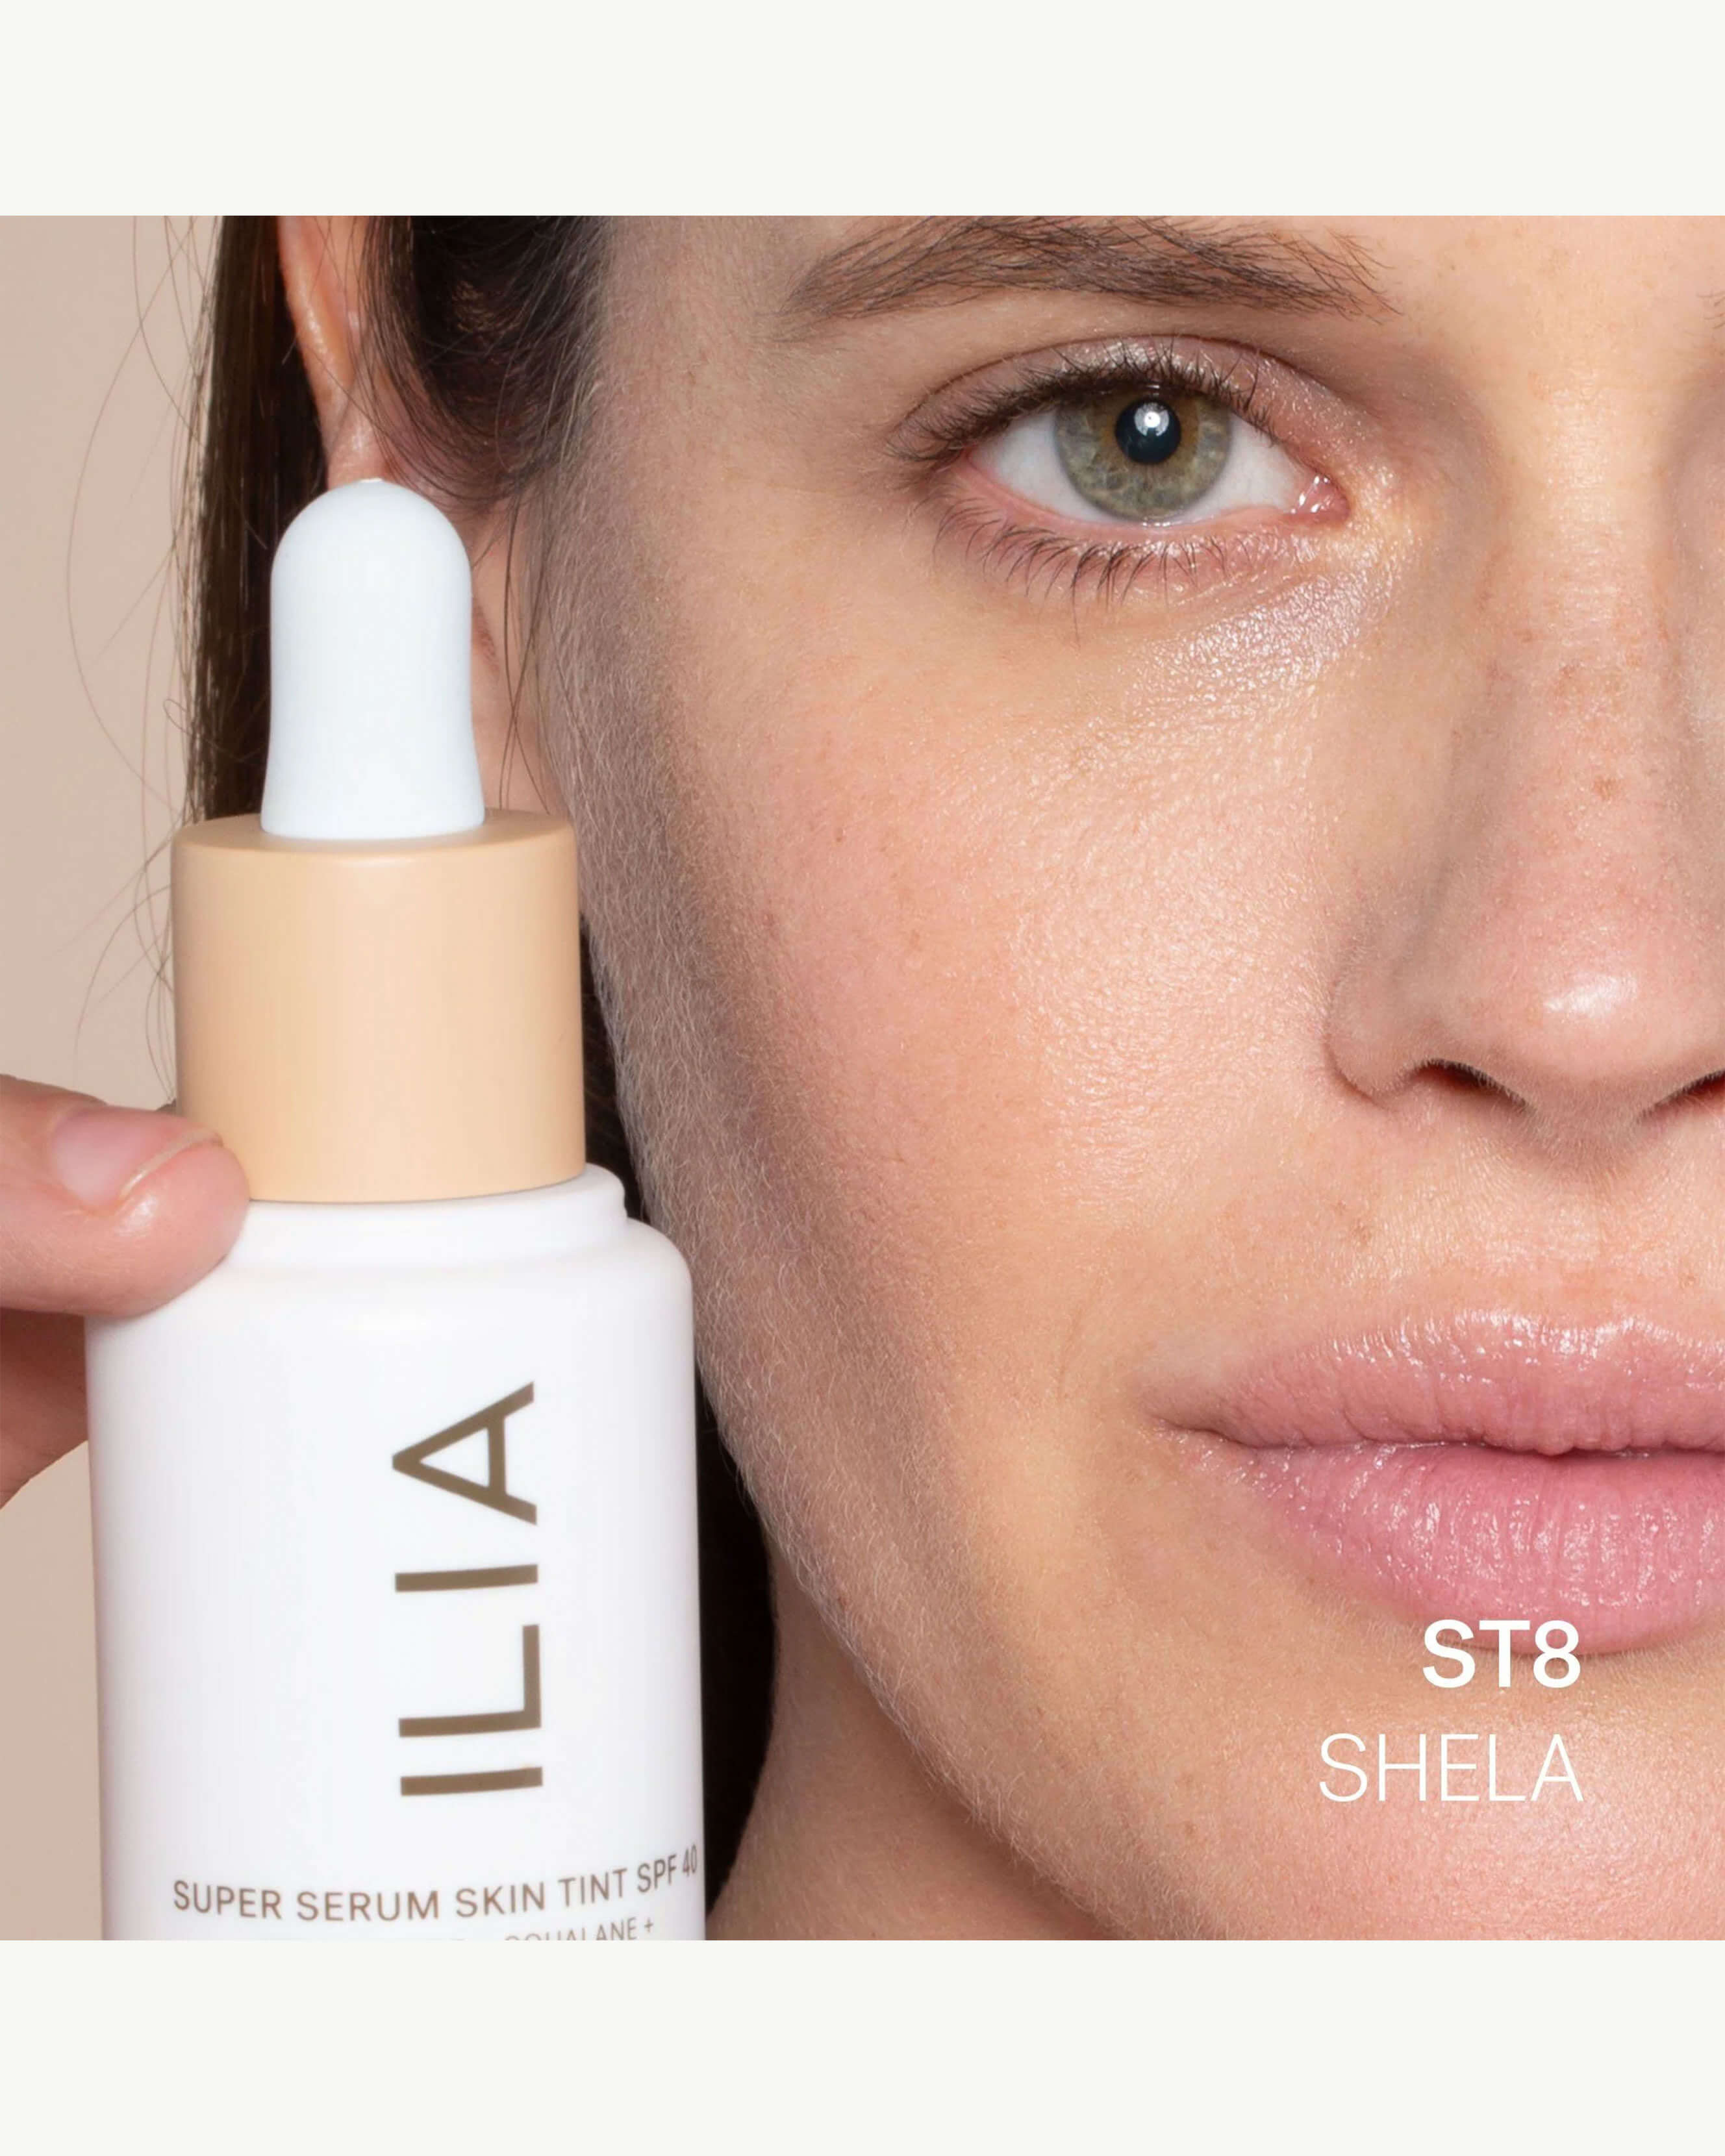 ST8 Shela (for light-med skin with neutral warm undertones)